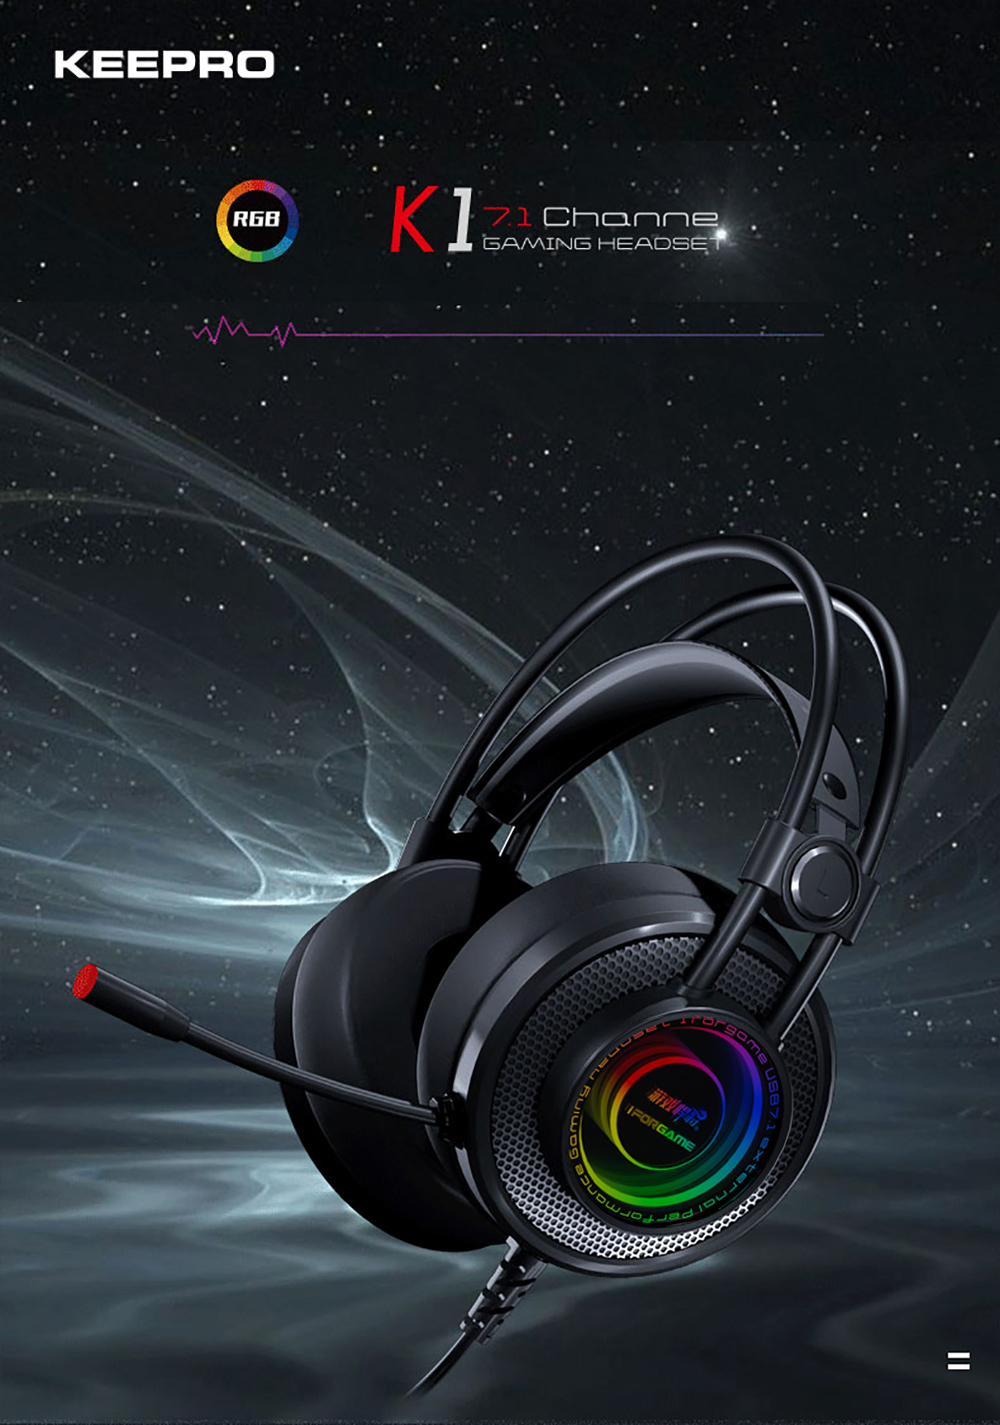 K1-Gaming-Headset-Virtual-71-Channel-50mm-Driver-Unit-RGB-Light-High-Sensitivity-Microphone-Headphon-1829874-1